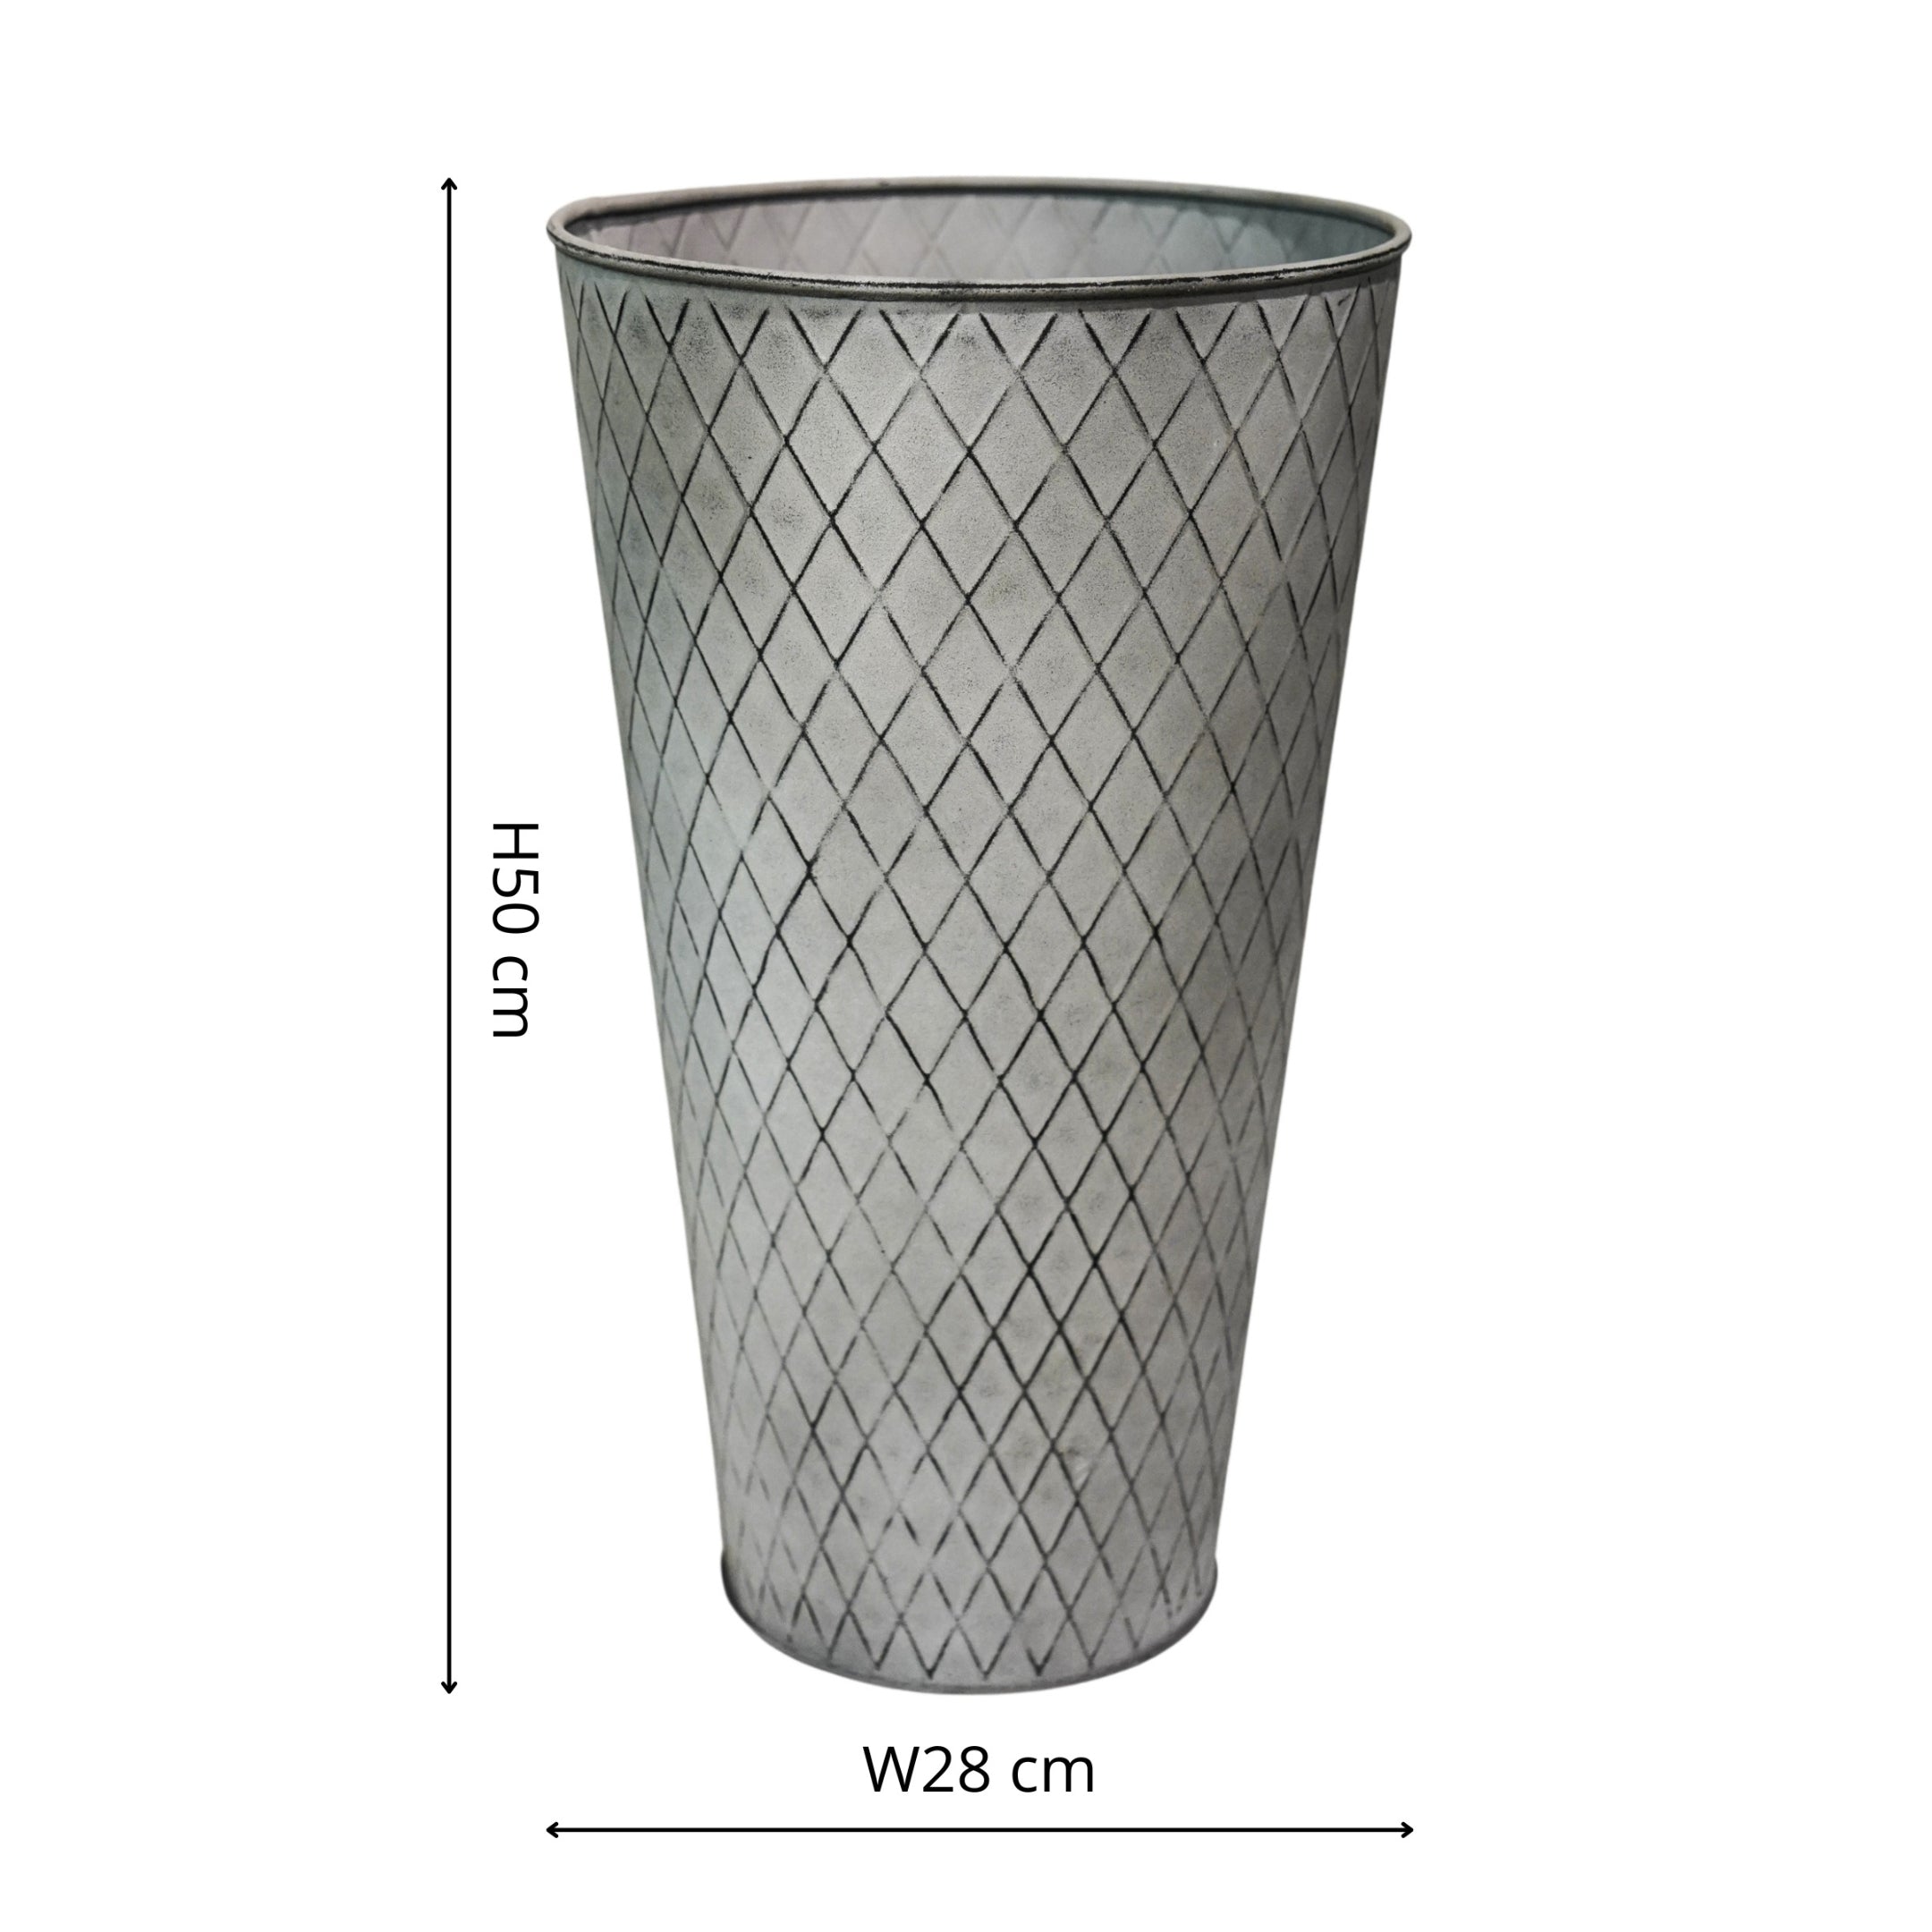 Outdoor Chatsworth Zinc Vase